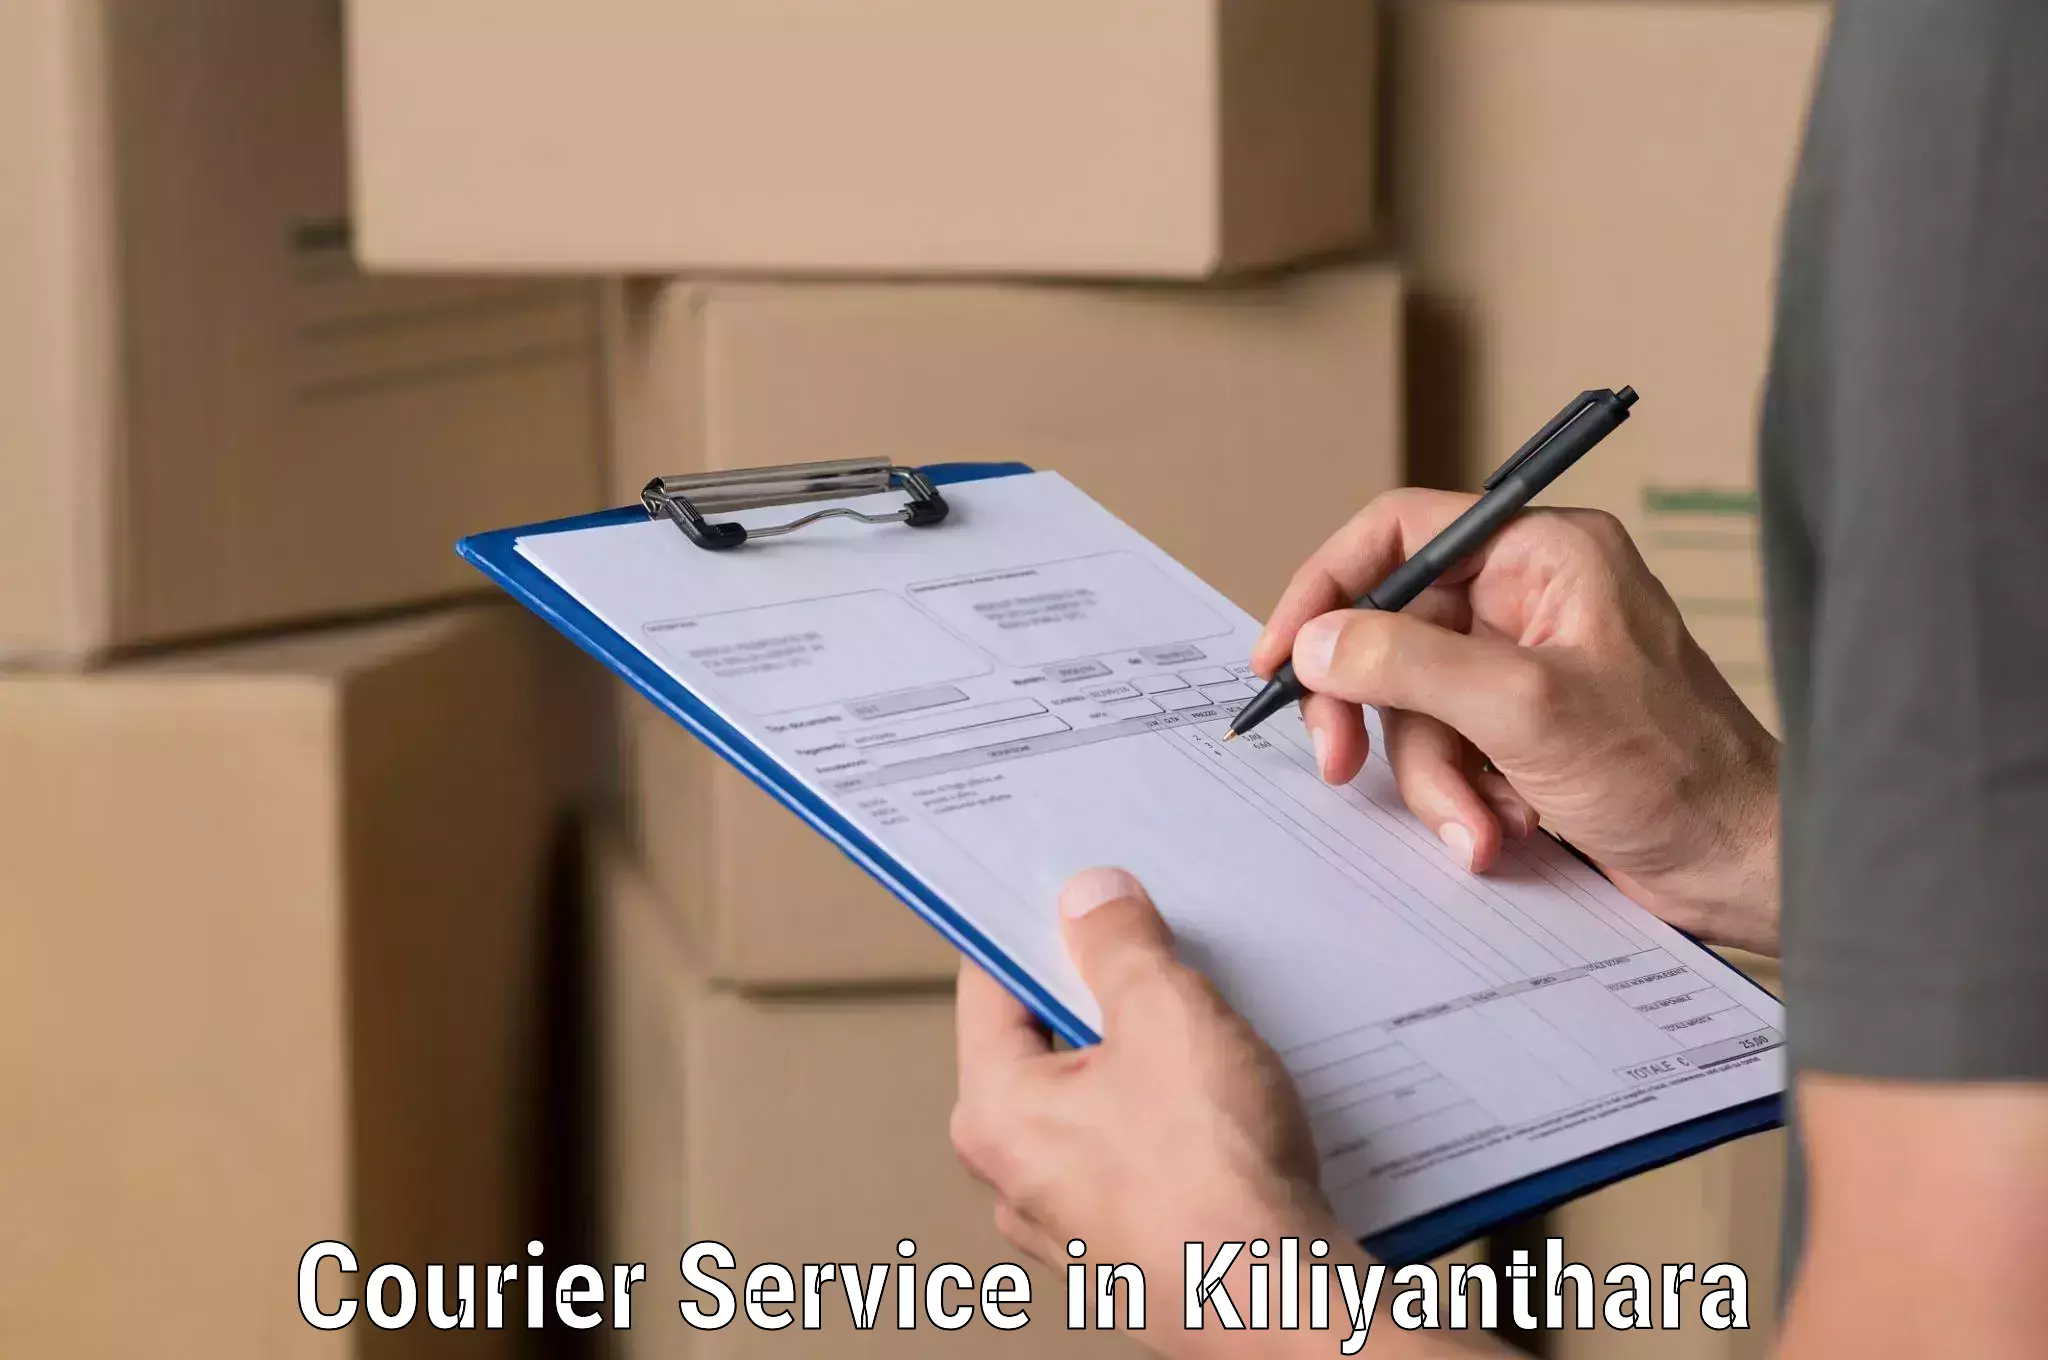 Logistics management in Kiliyanthara